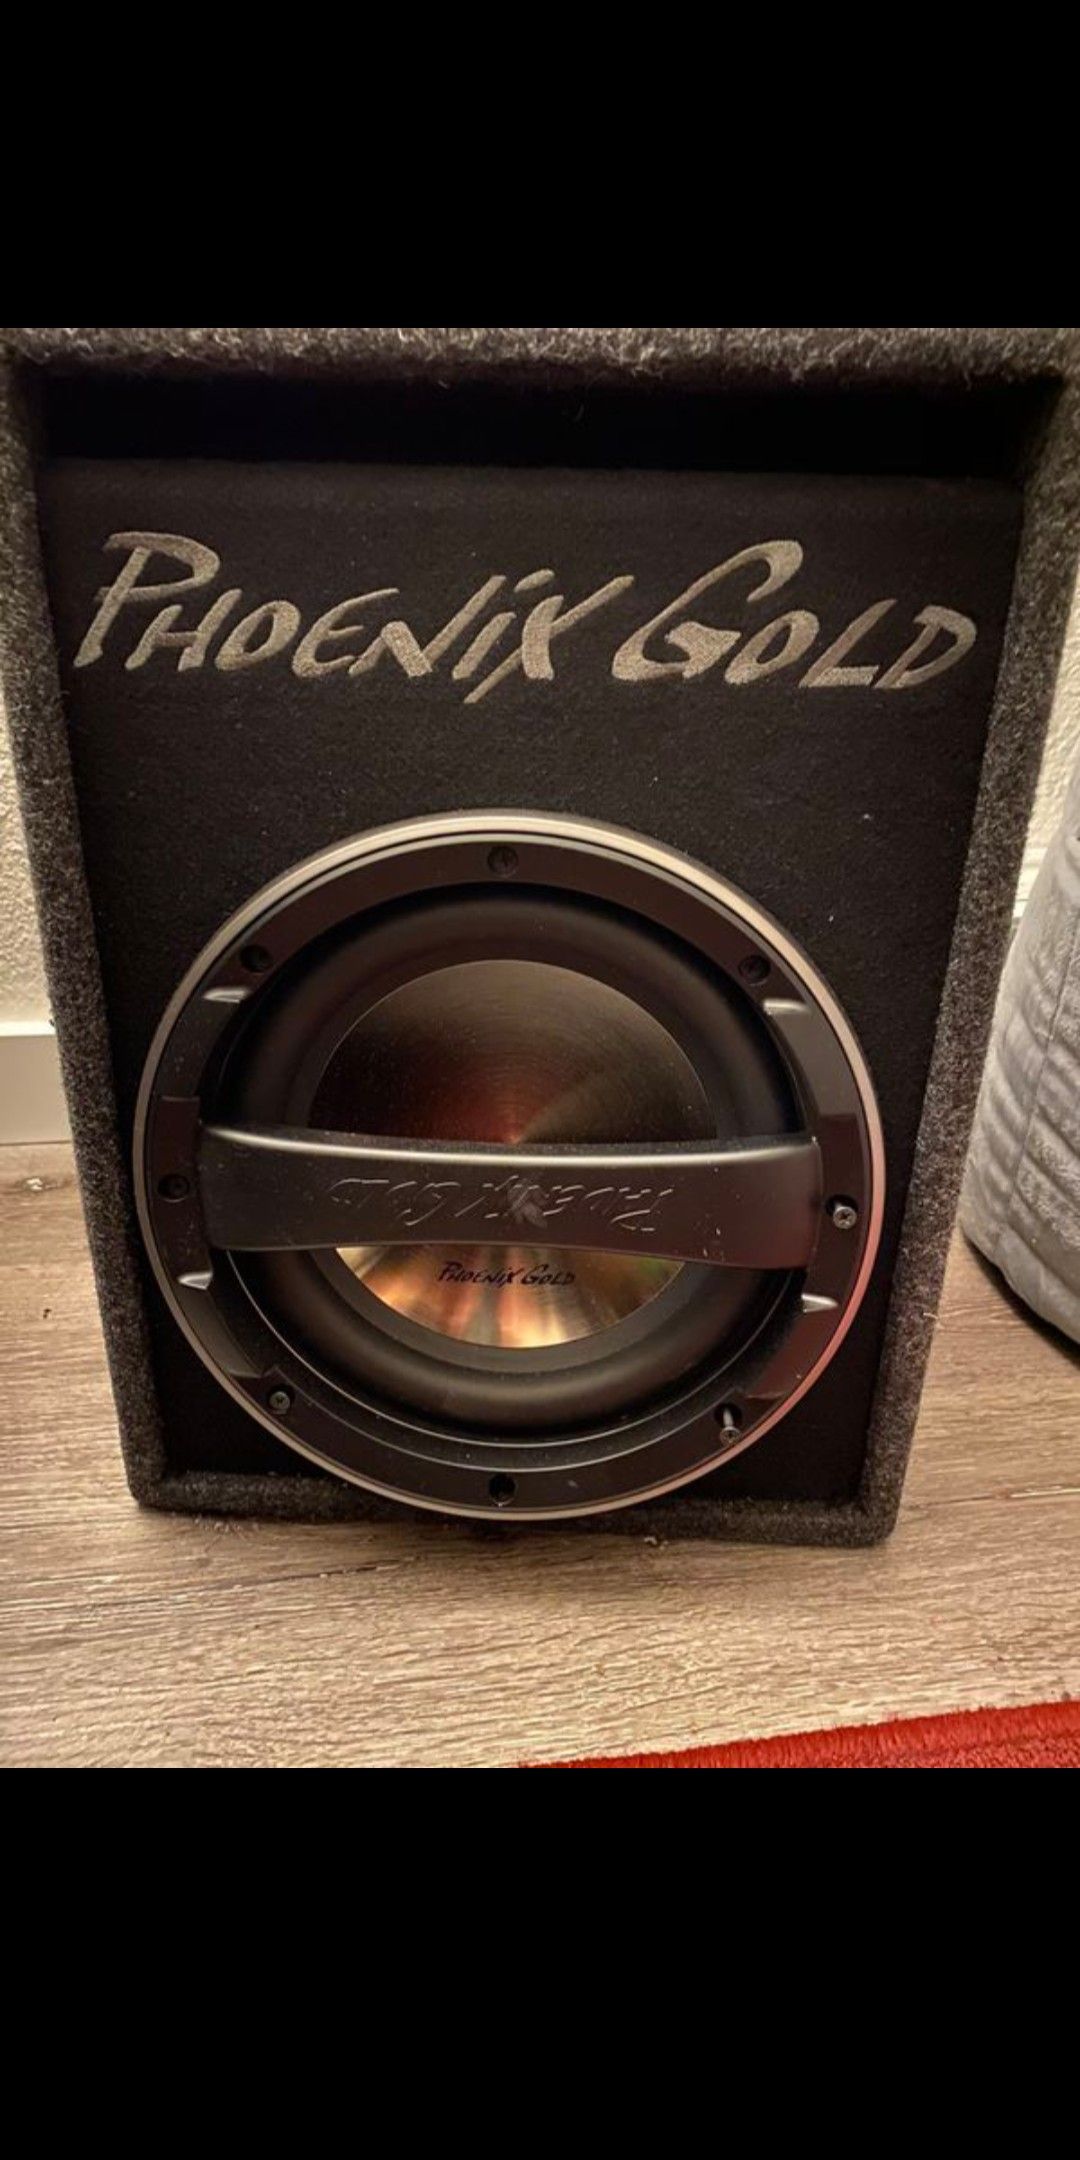 Phoenix gold amp and sub